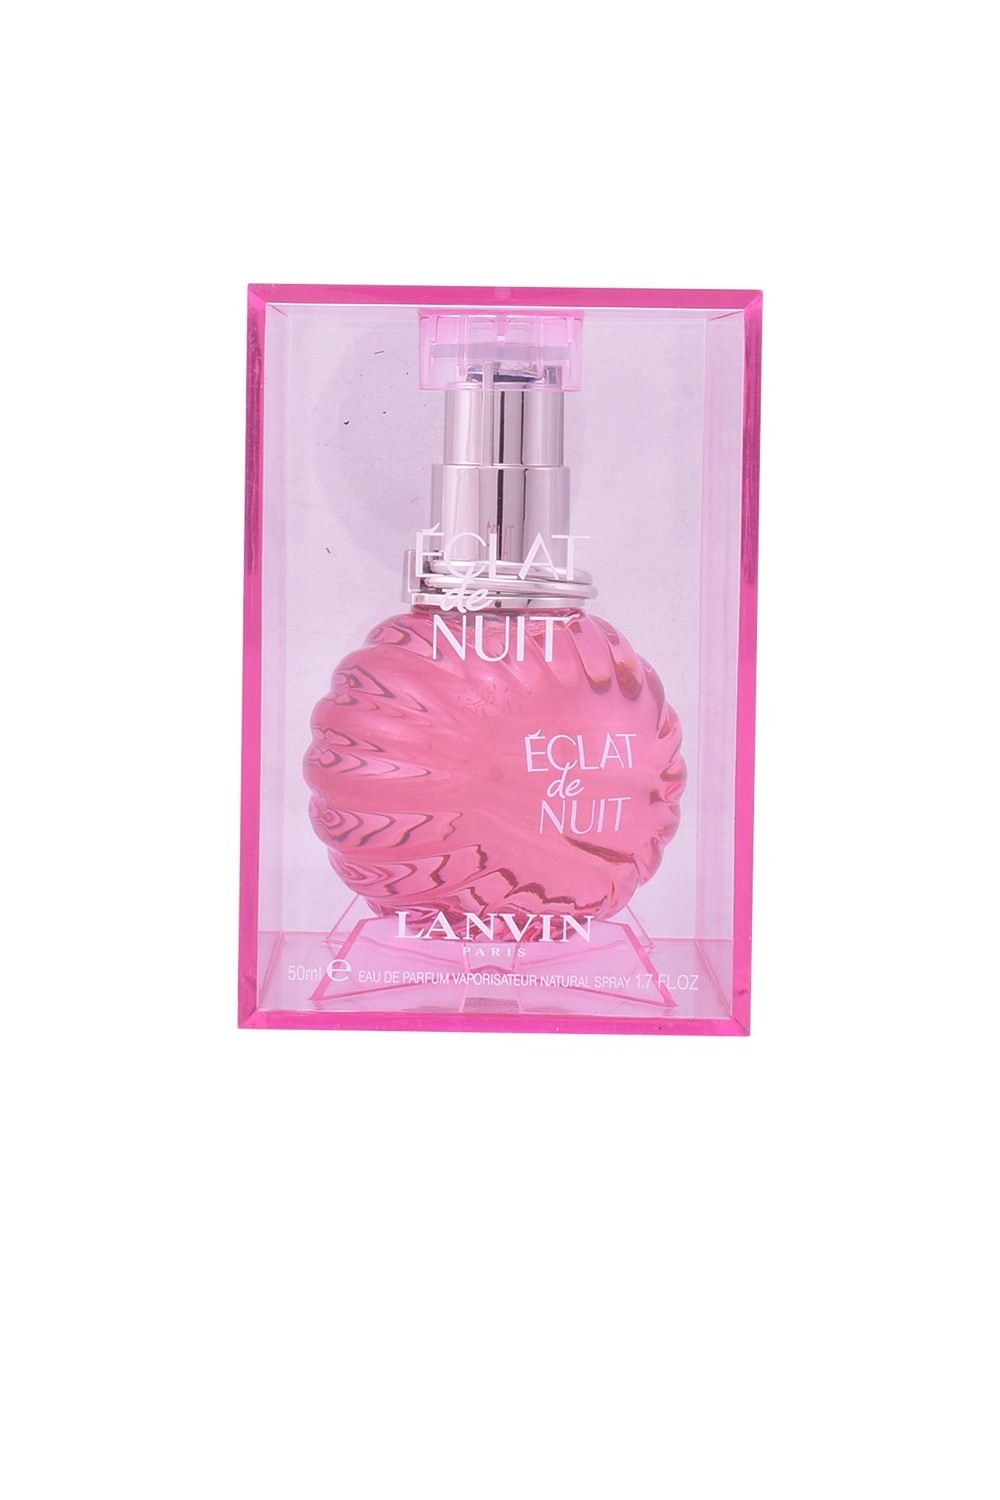 Lanvin Eclat De Nuit Eau De Perfume Spray 50ml